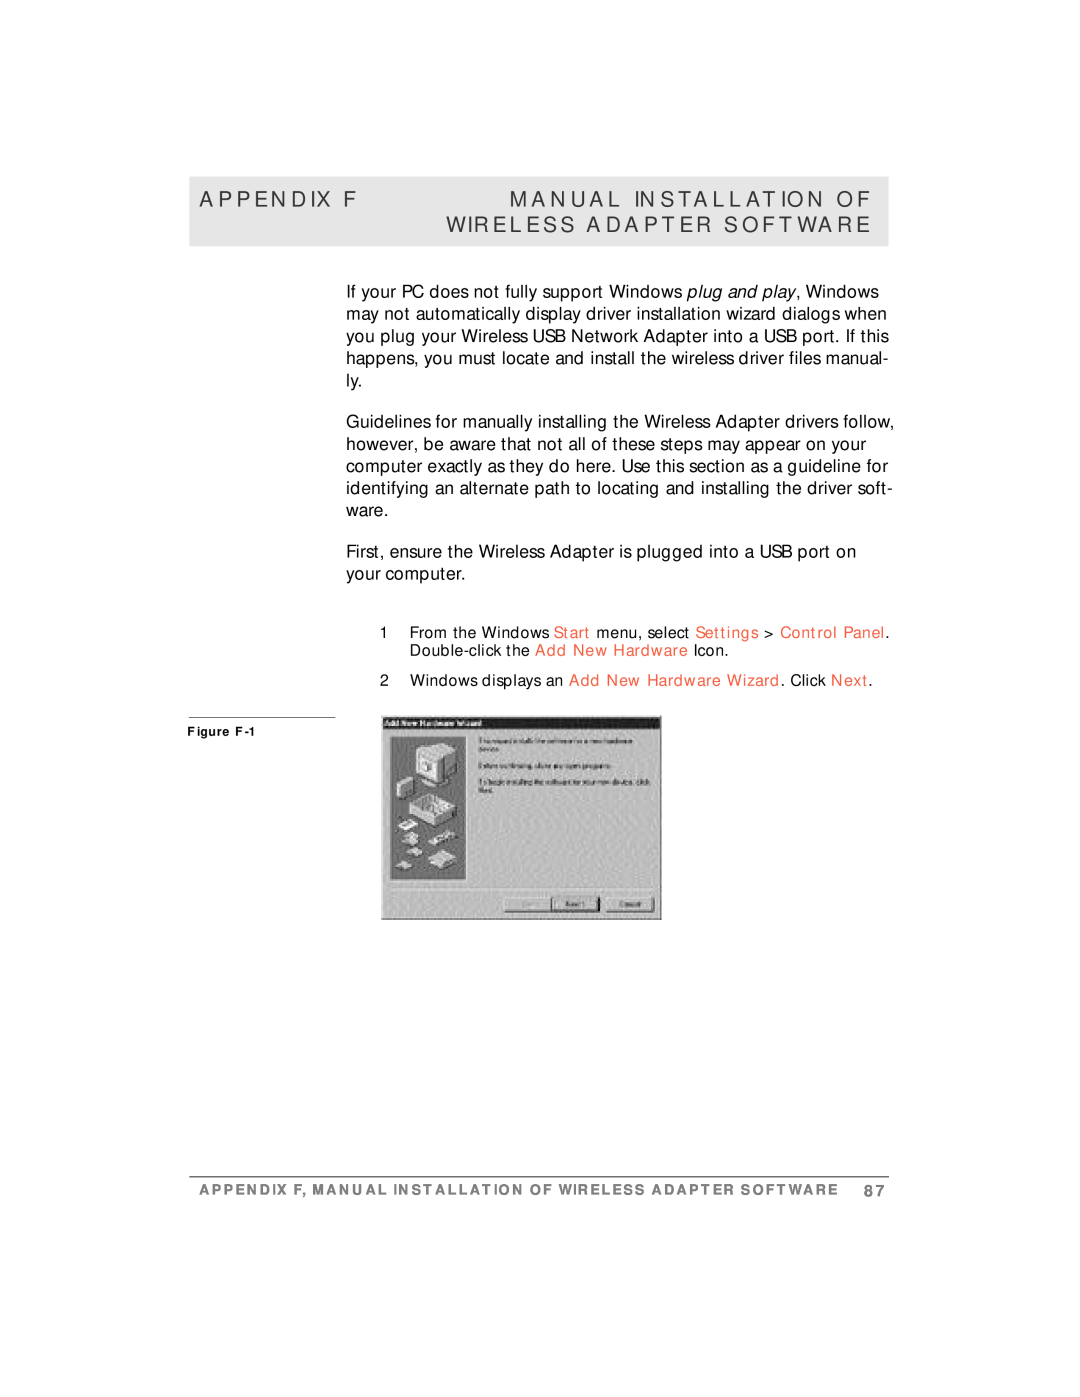 Motorola simplefi manual Appendix F, Manual Installation Of, Wireless Adapter Software, Figure F-1 